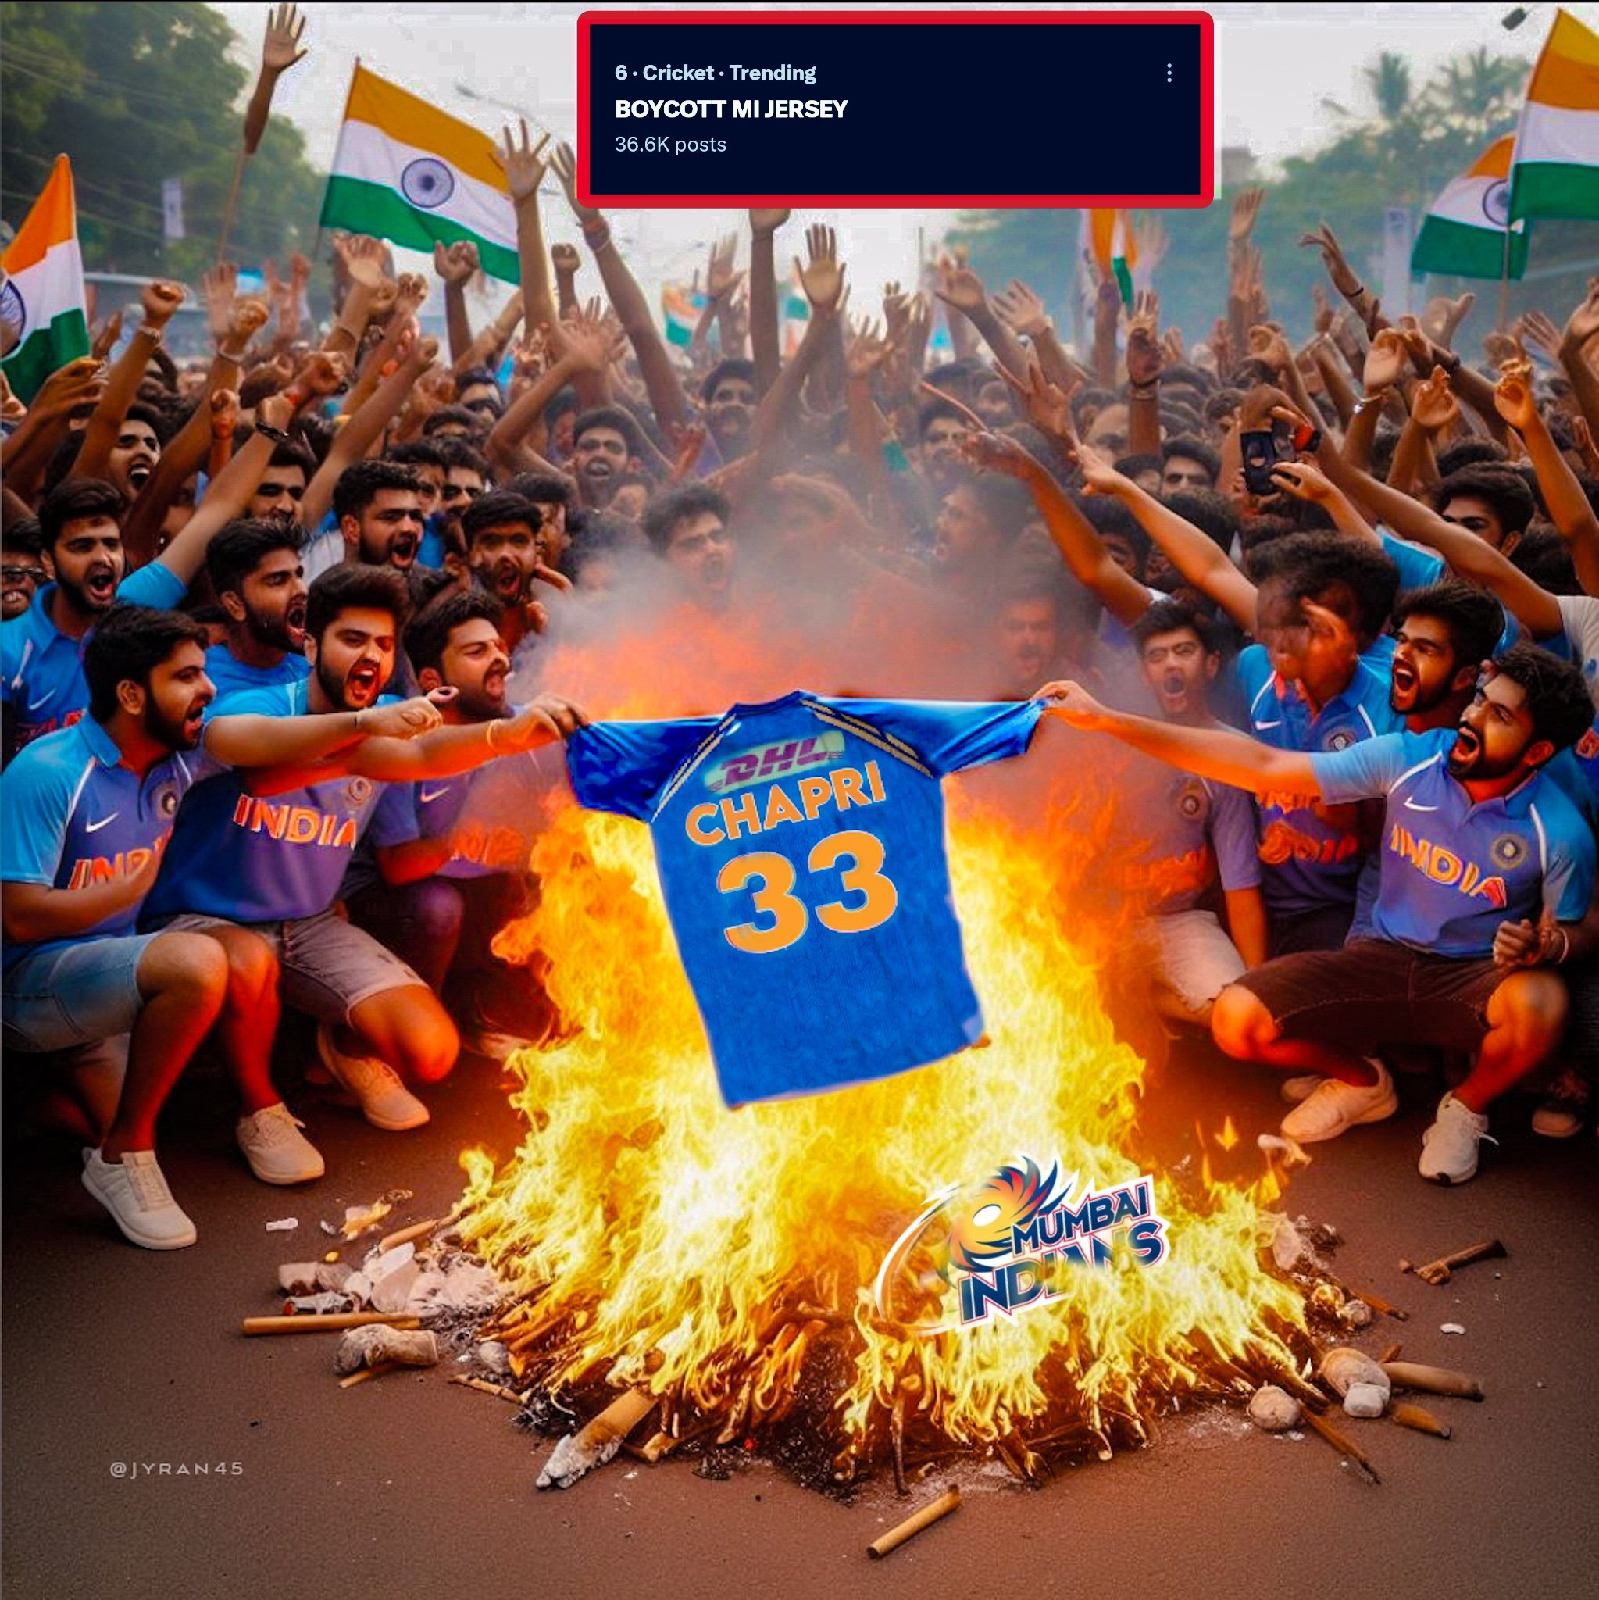 VIDEO Rohit Sharma fans are burning MI Jersey in Boycott